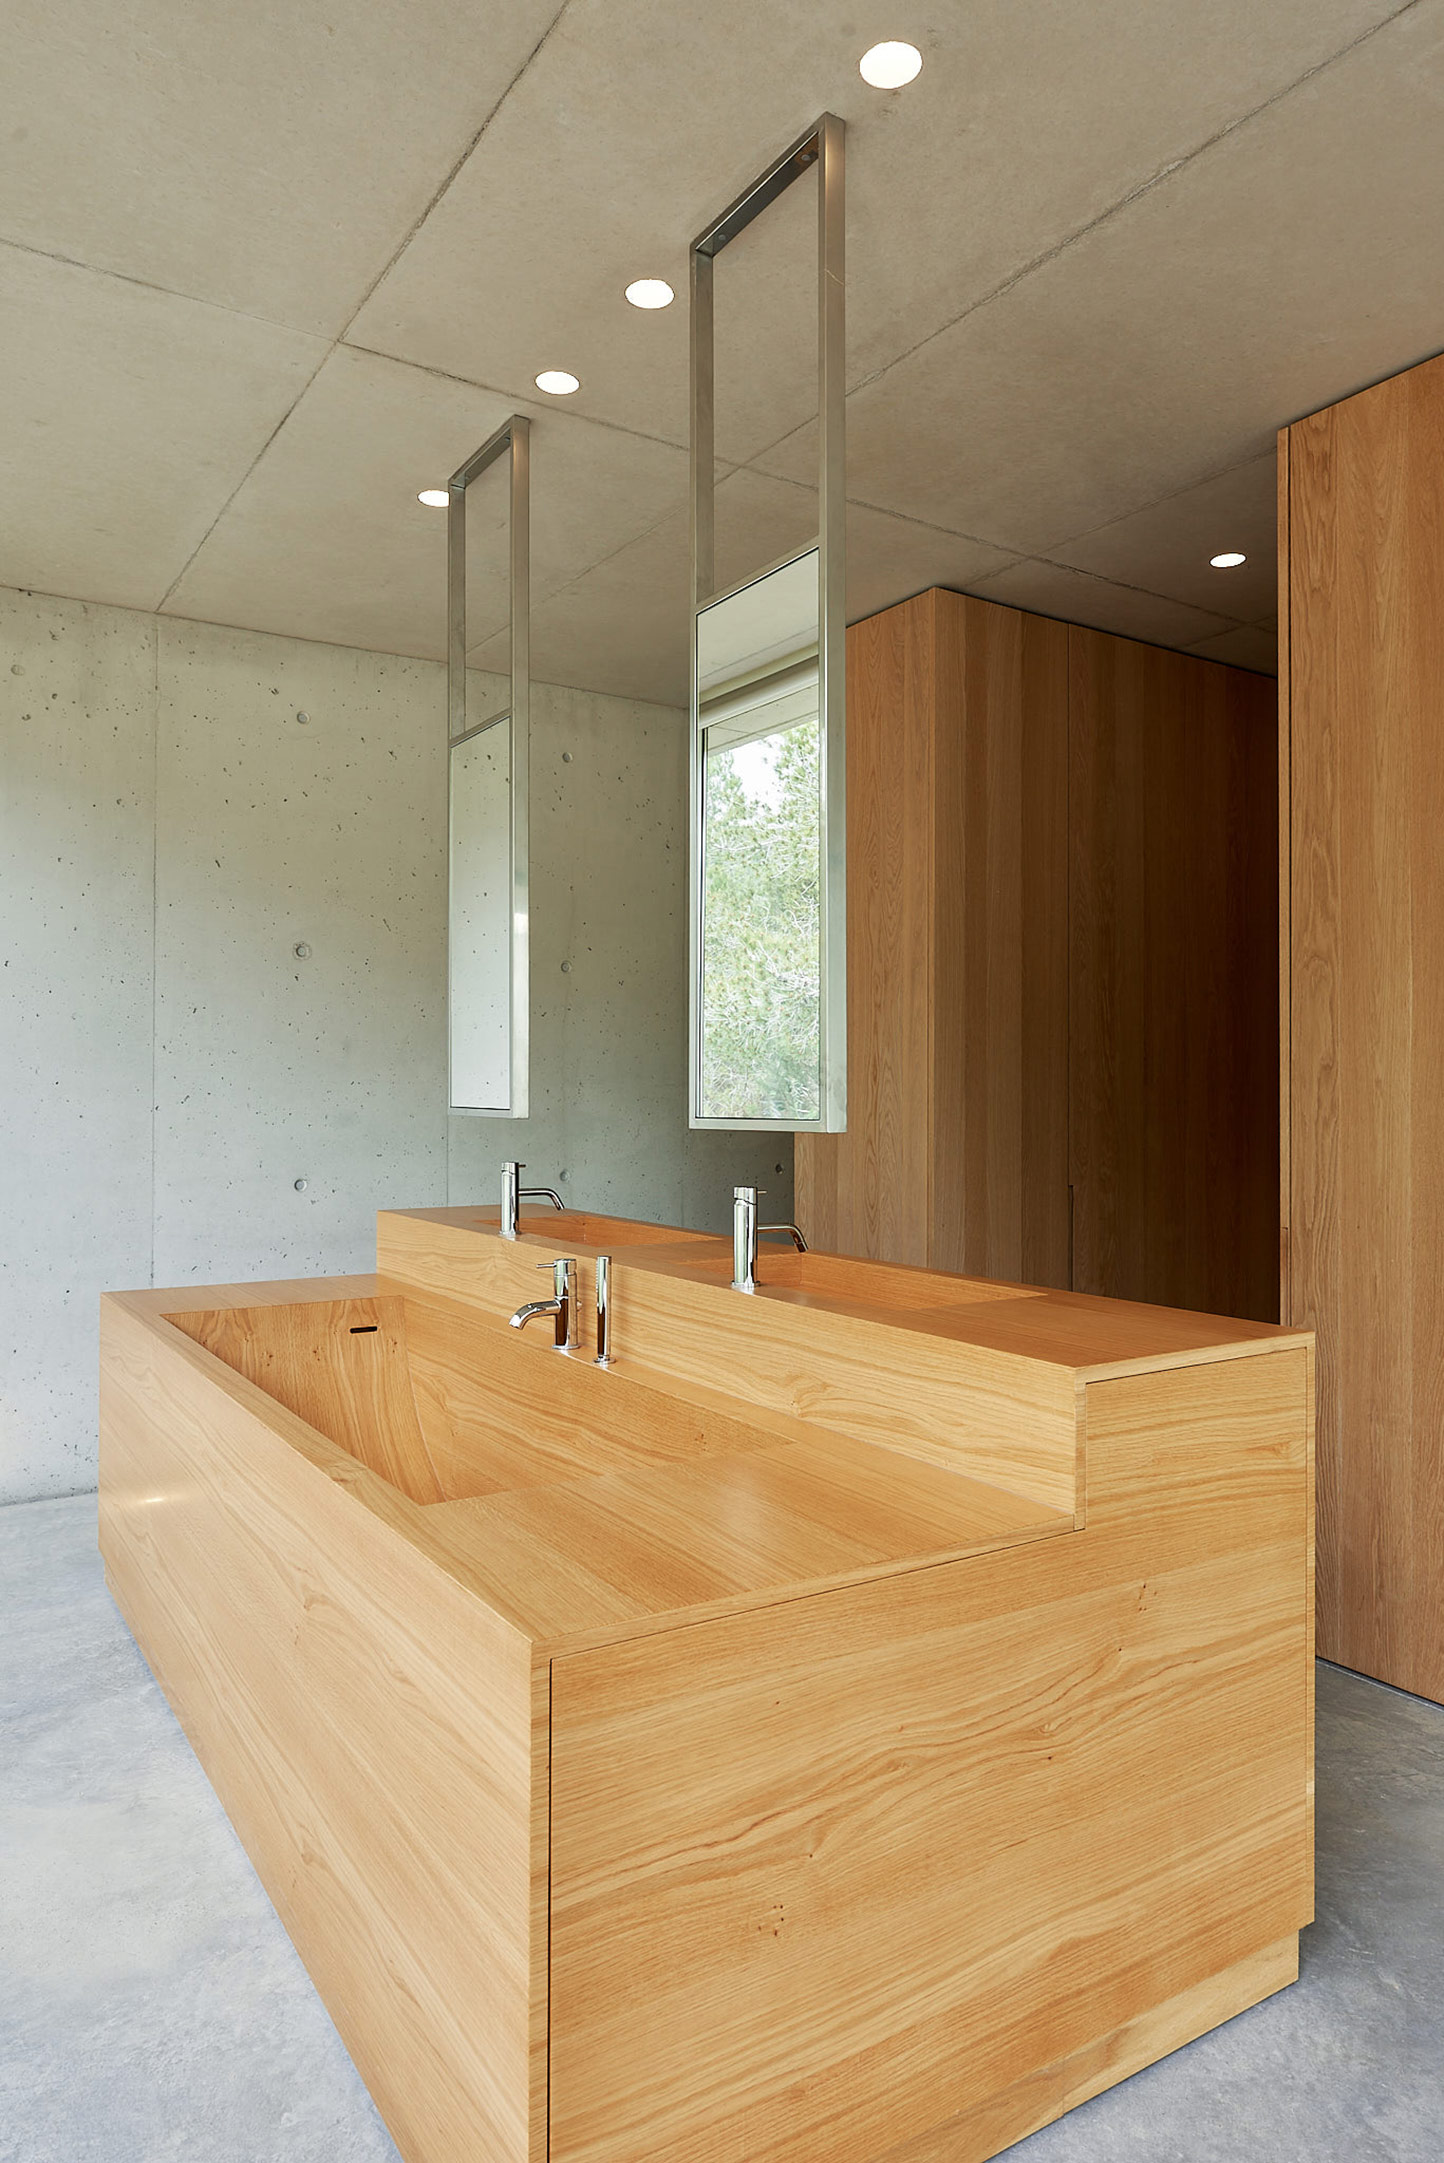 Image no. 6 of Custom wooden bathtub and vanity in Oak - Bathroom Island